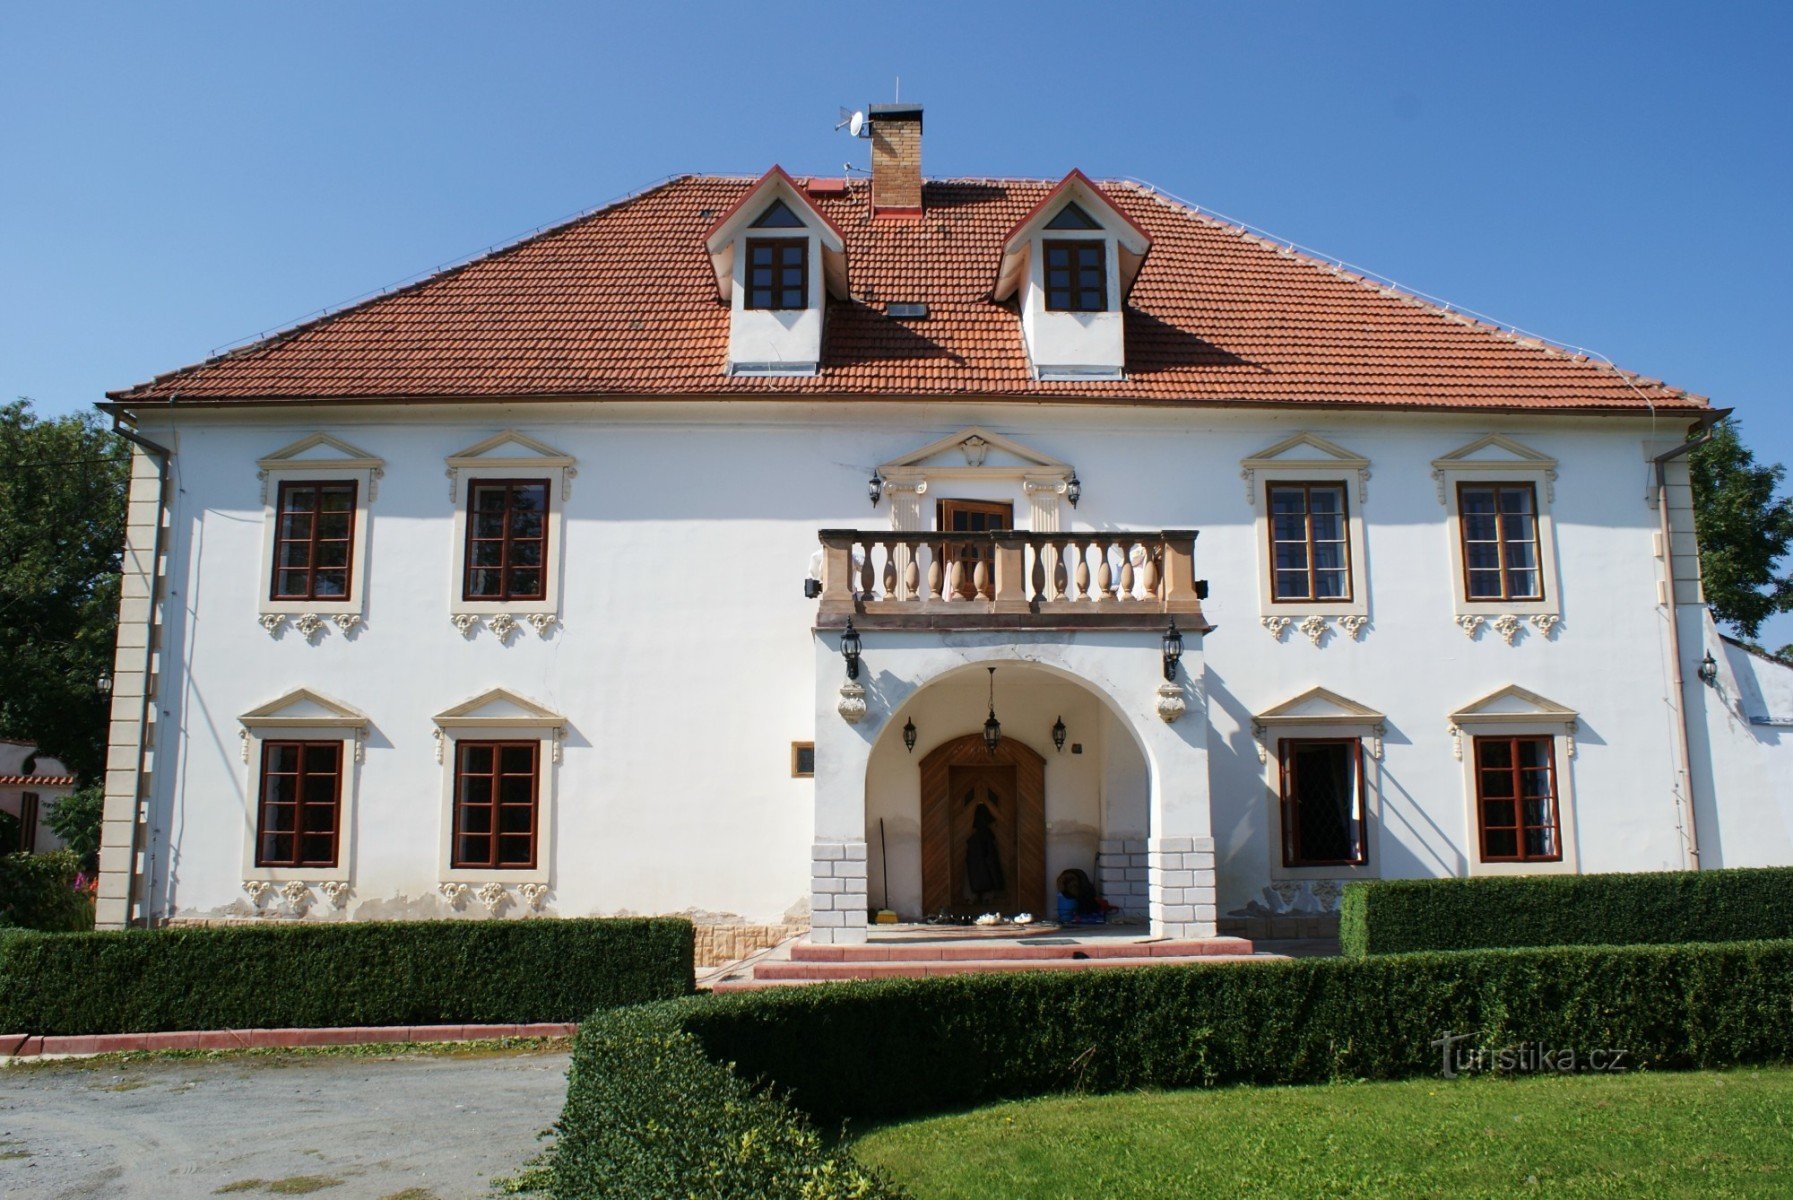 castello barocco - Horní dvůr